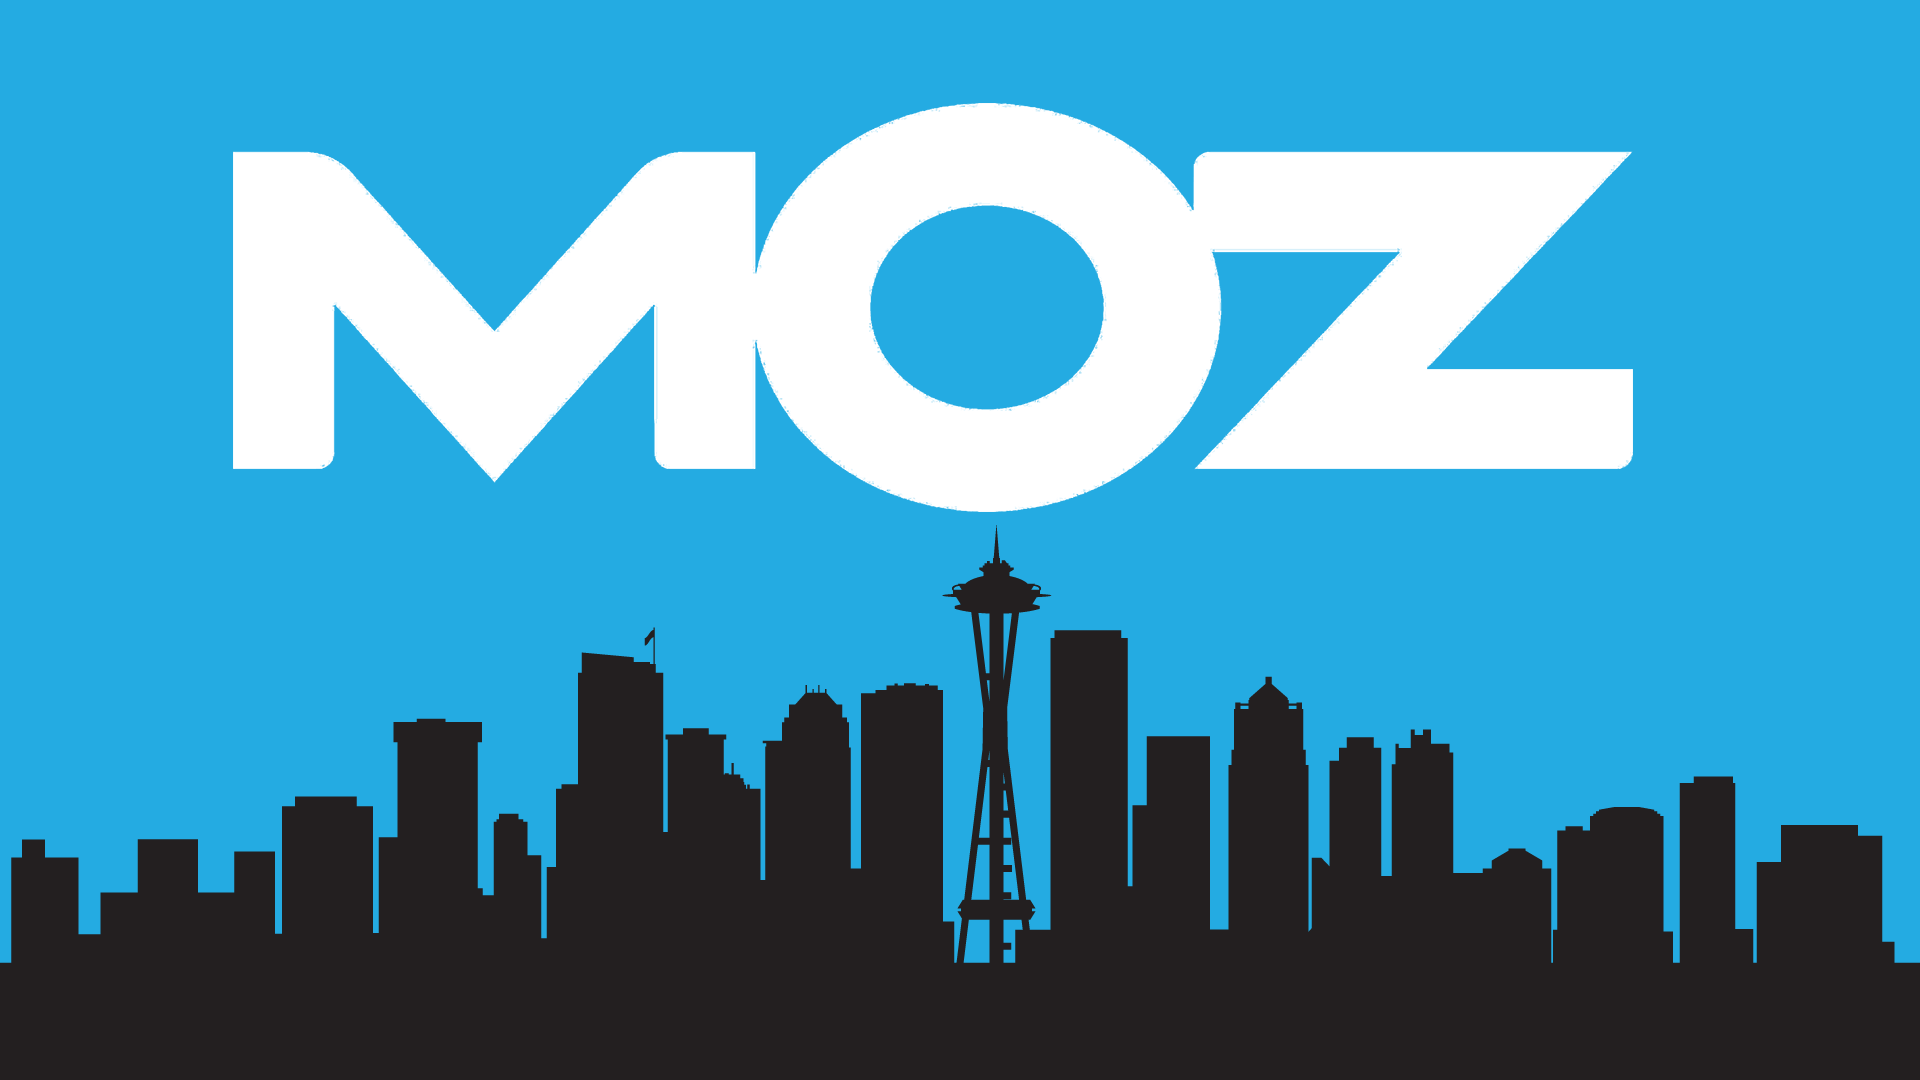 moz-logo-seattle-skyline-ss-1920.png